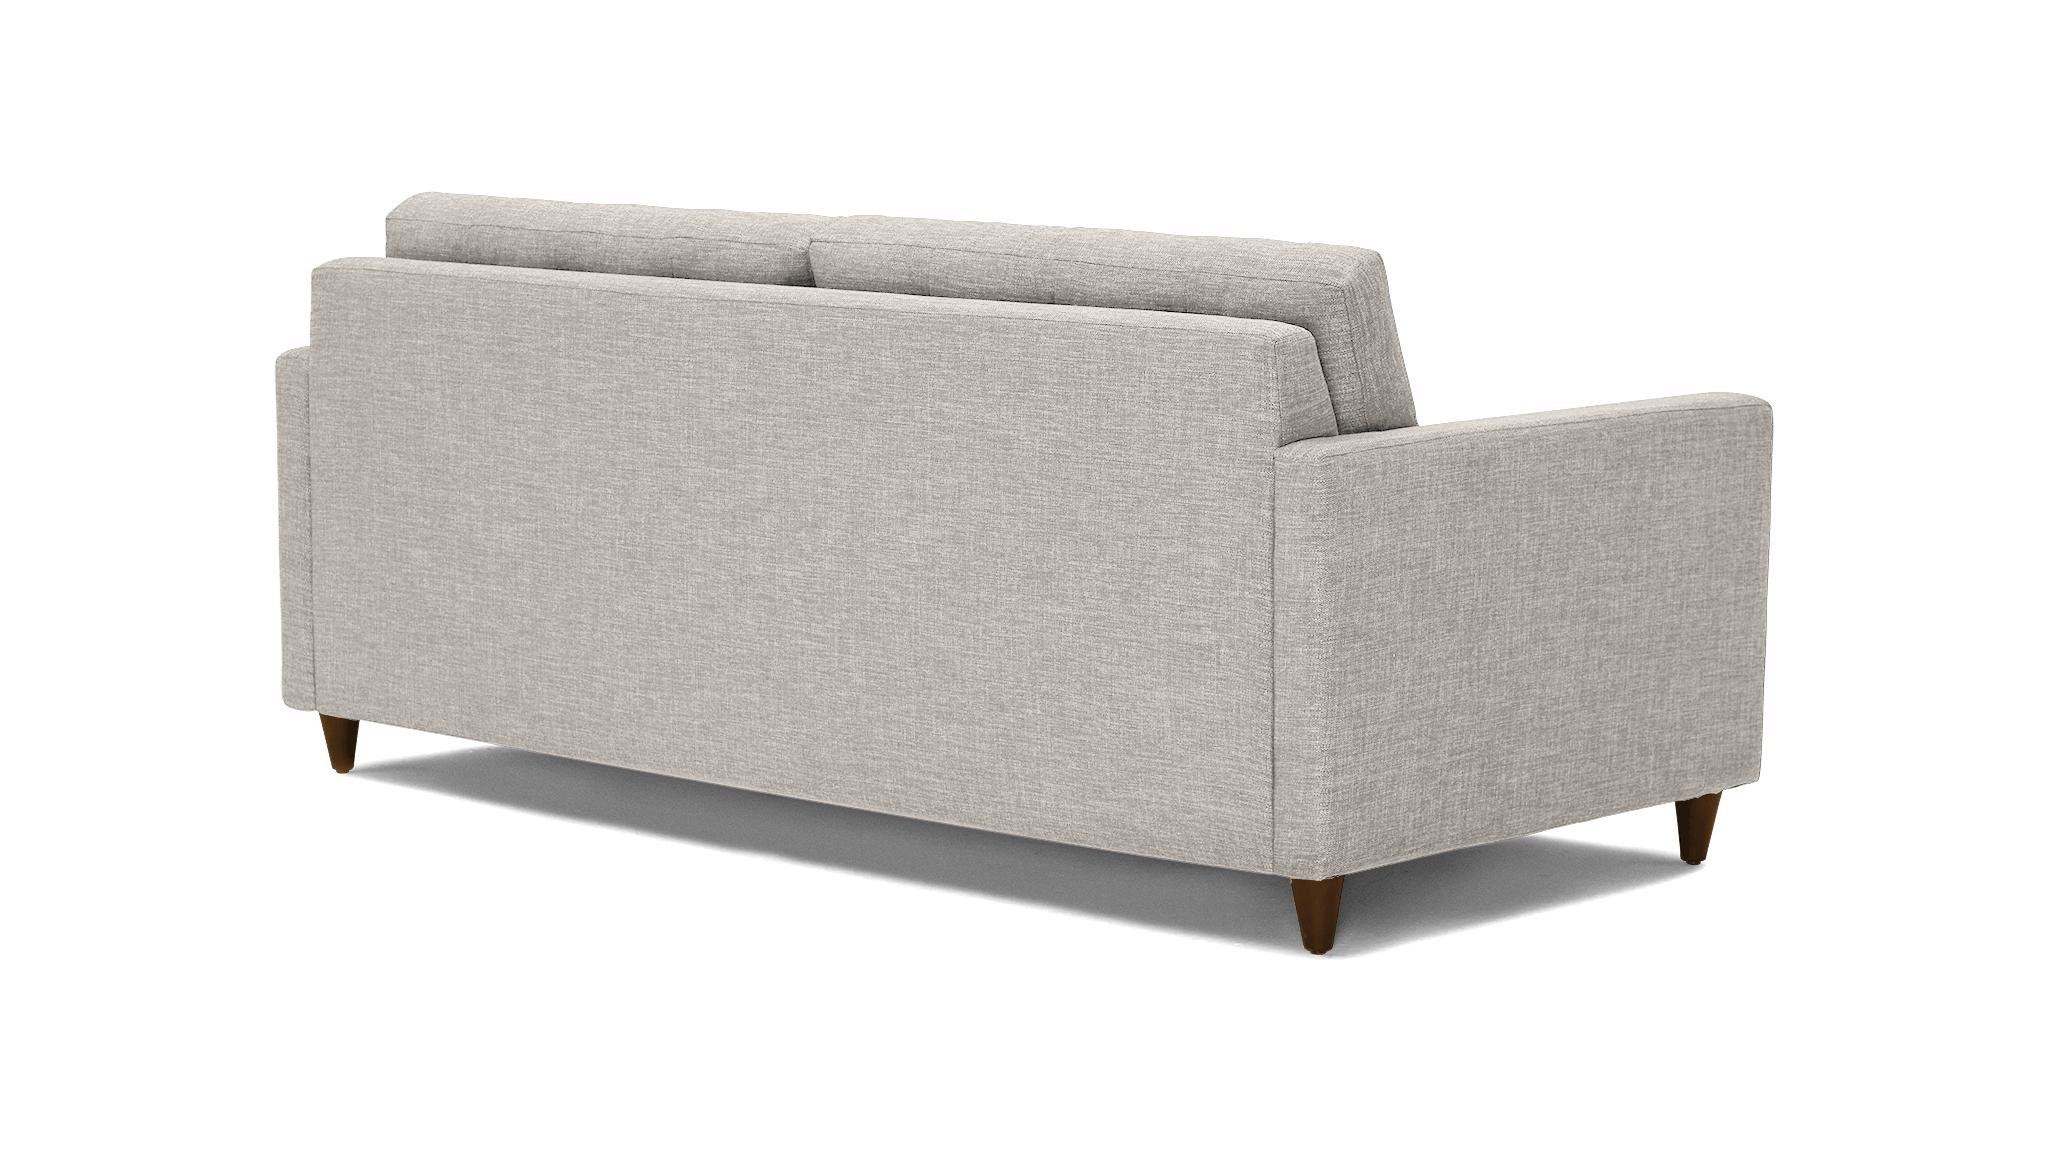 Gray Eliot Mid Century Modern Sleeper Sofa - Prime Stone - Mocha - Standard Foam - Image 3